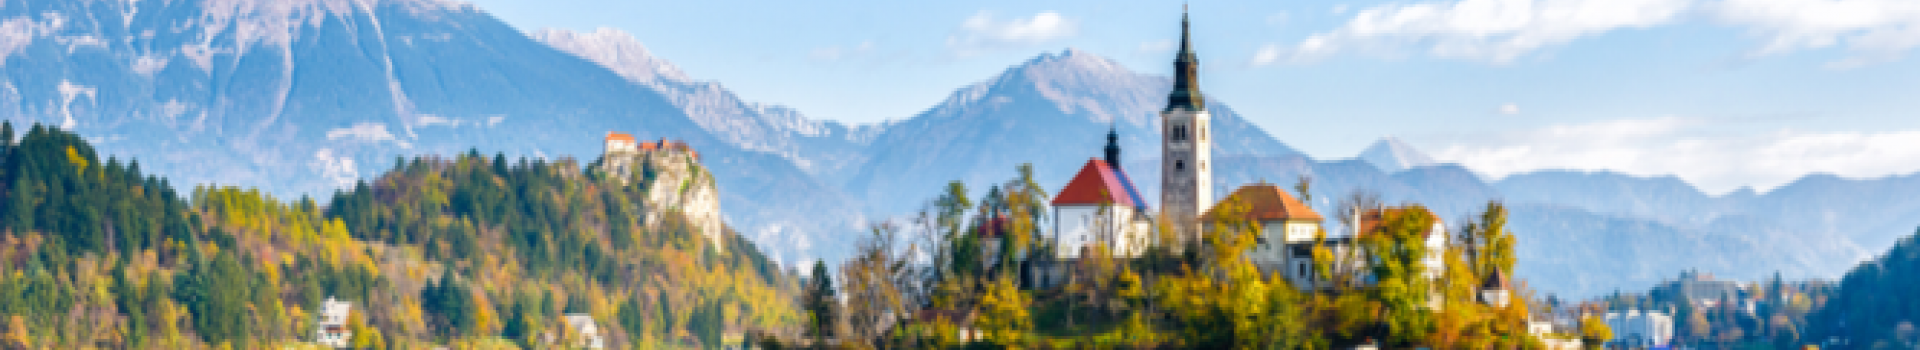 Country Destination Page - Holidays to Slovenia - Cassidy Travel